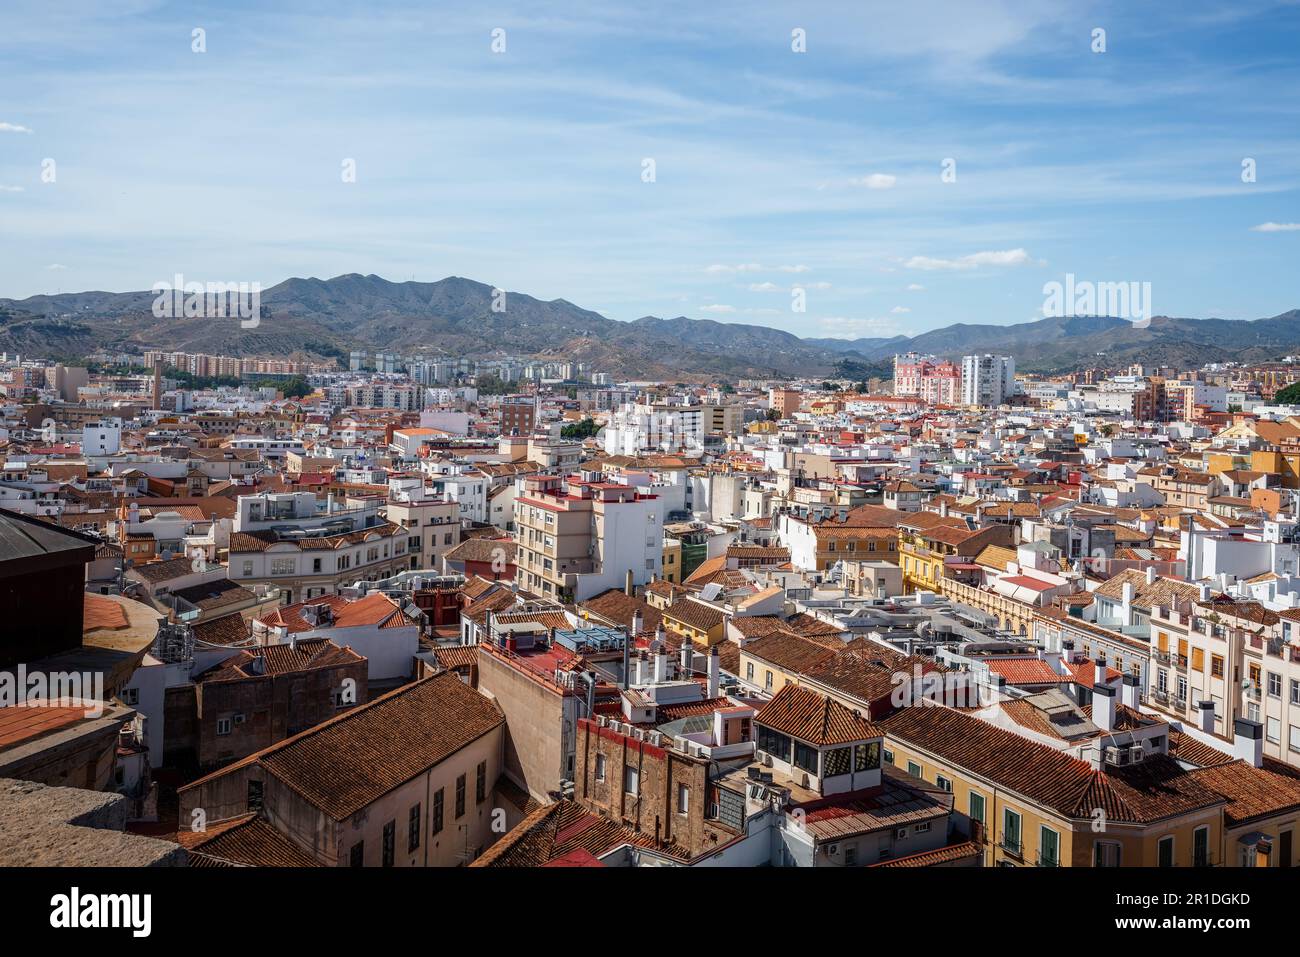 Aerial view of Malaga Buildings - Malaga, Andalusia, Spain Stock Photo